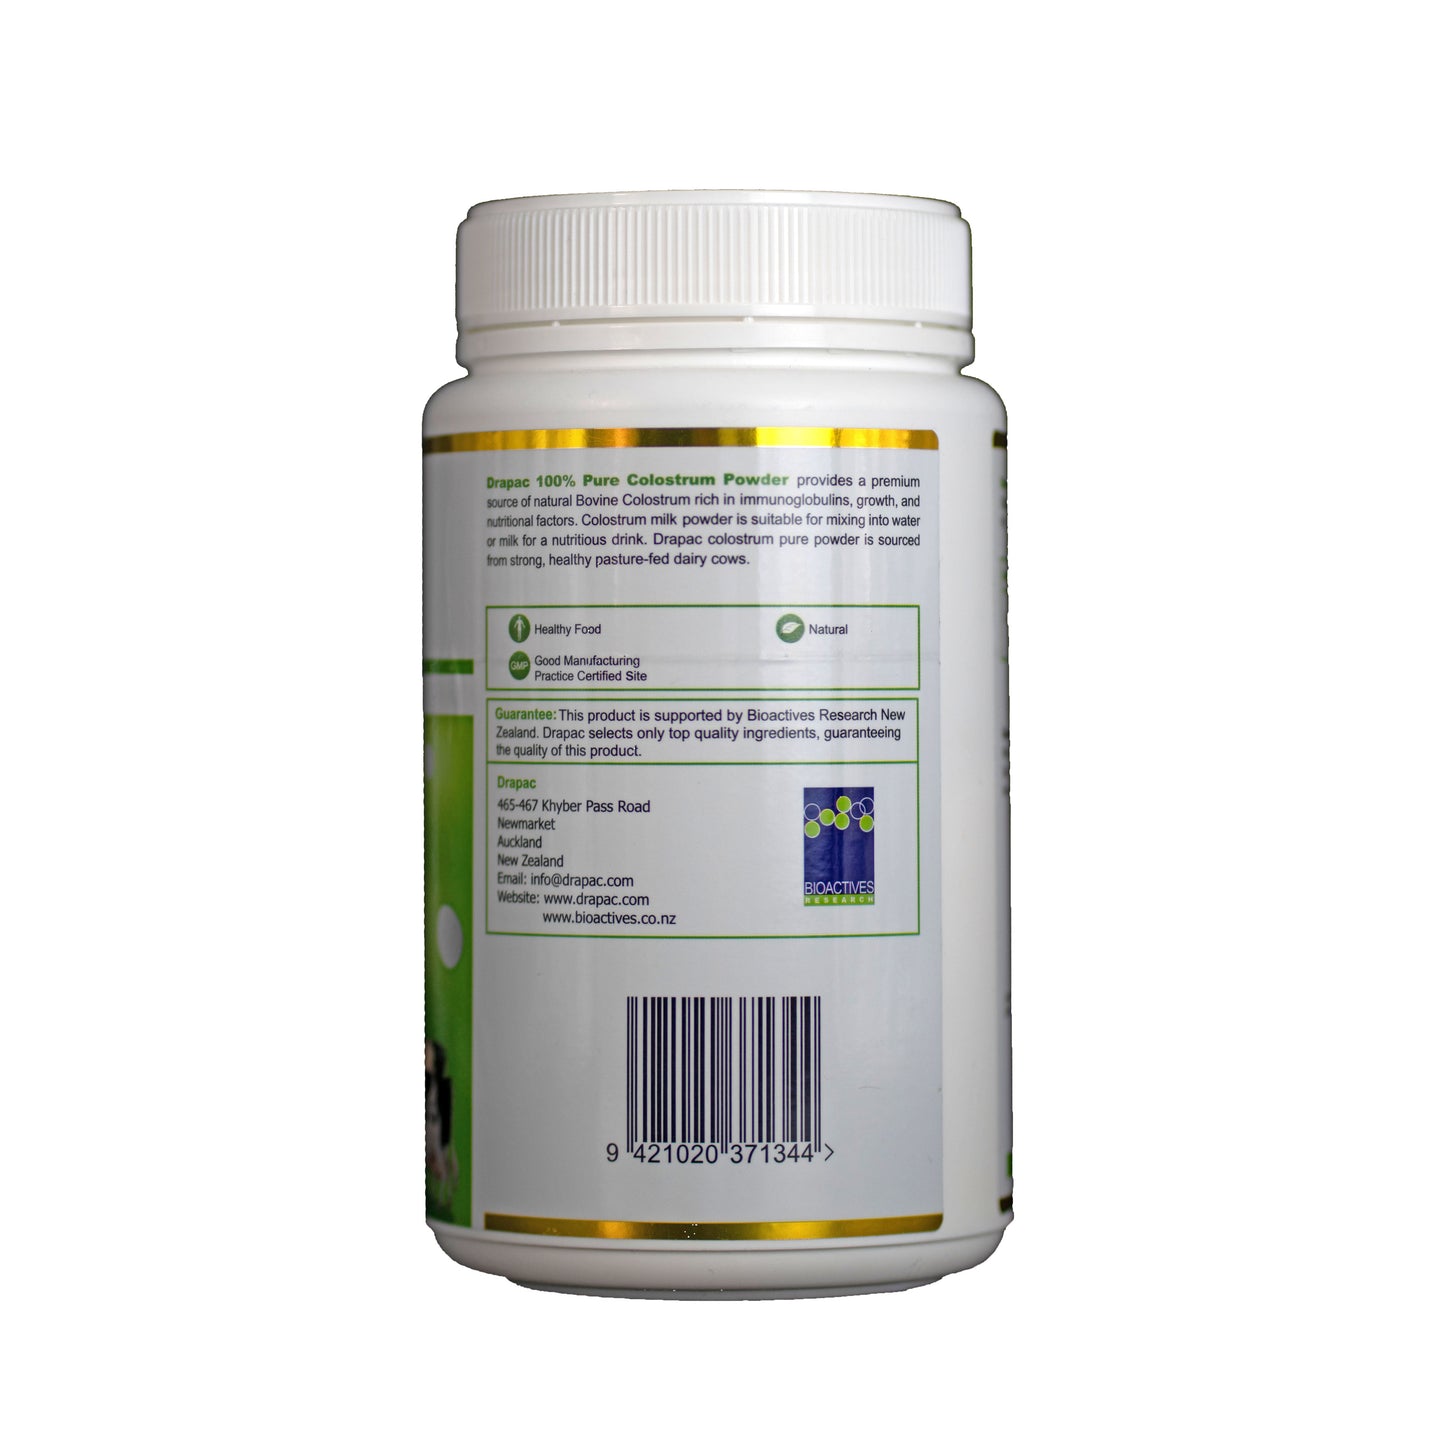 Drapac 100% Pure Colostrum Powder 300g